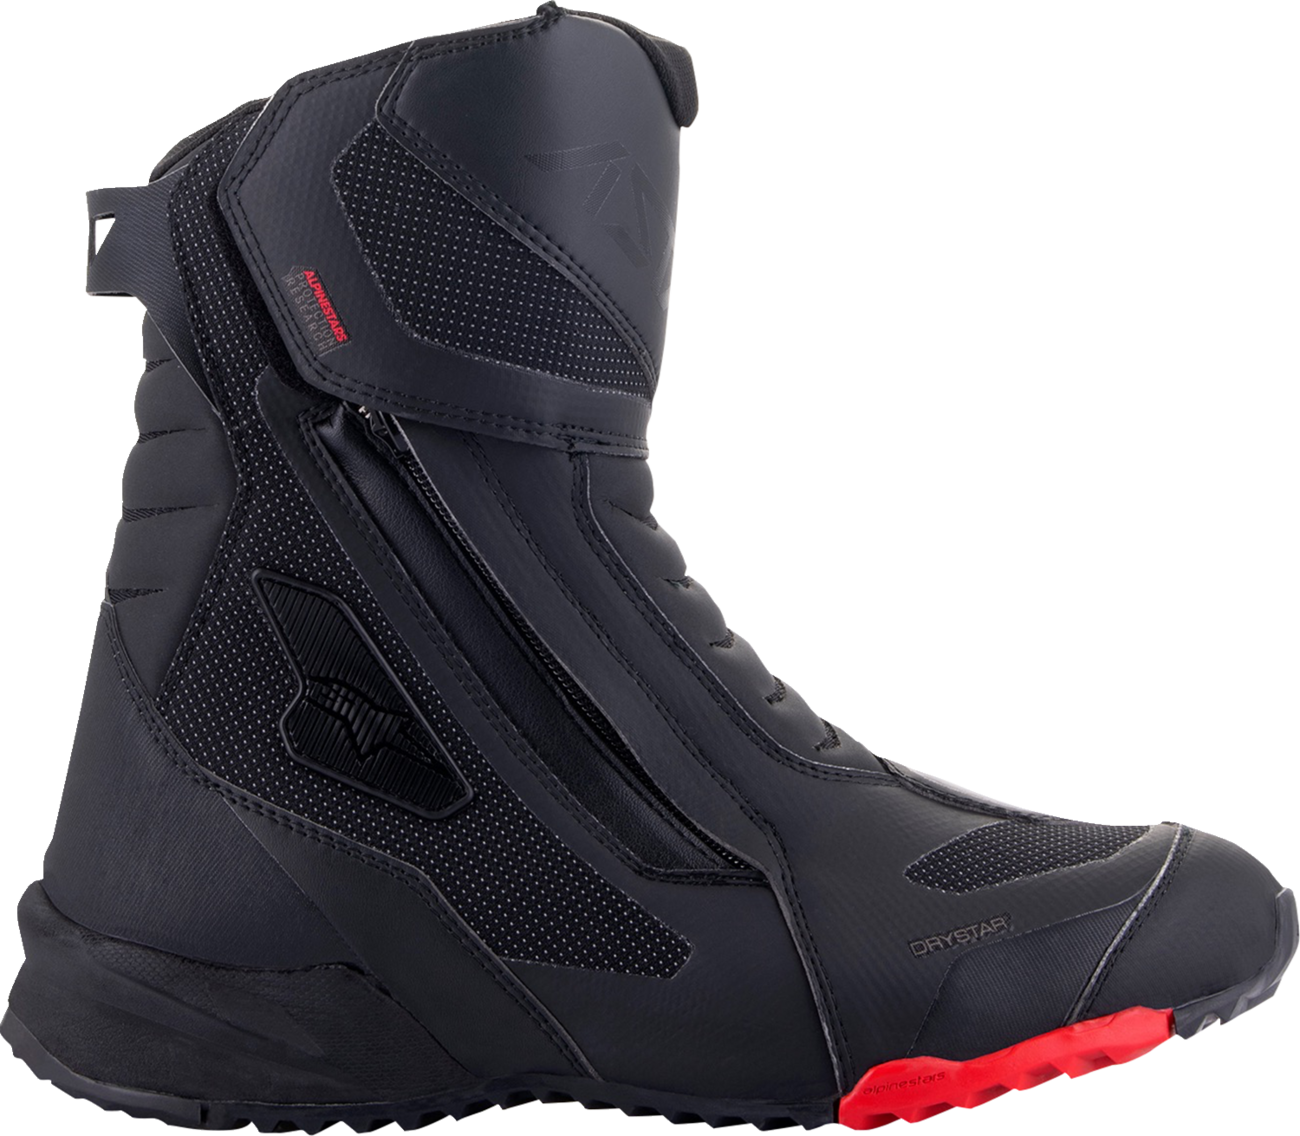 ALPINESTARS RT-7 Drystar® Boots - Black/Red - US 7.5 / EU 40 2443023-13-40